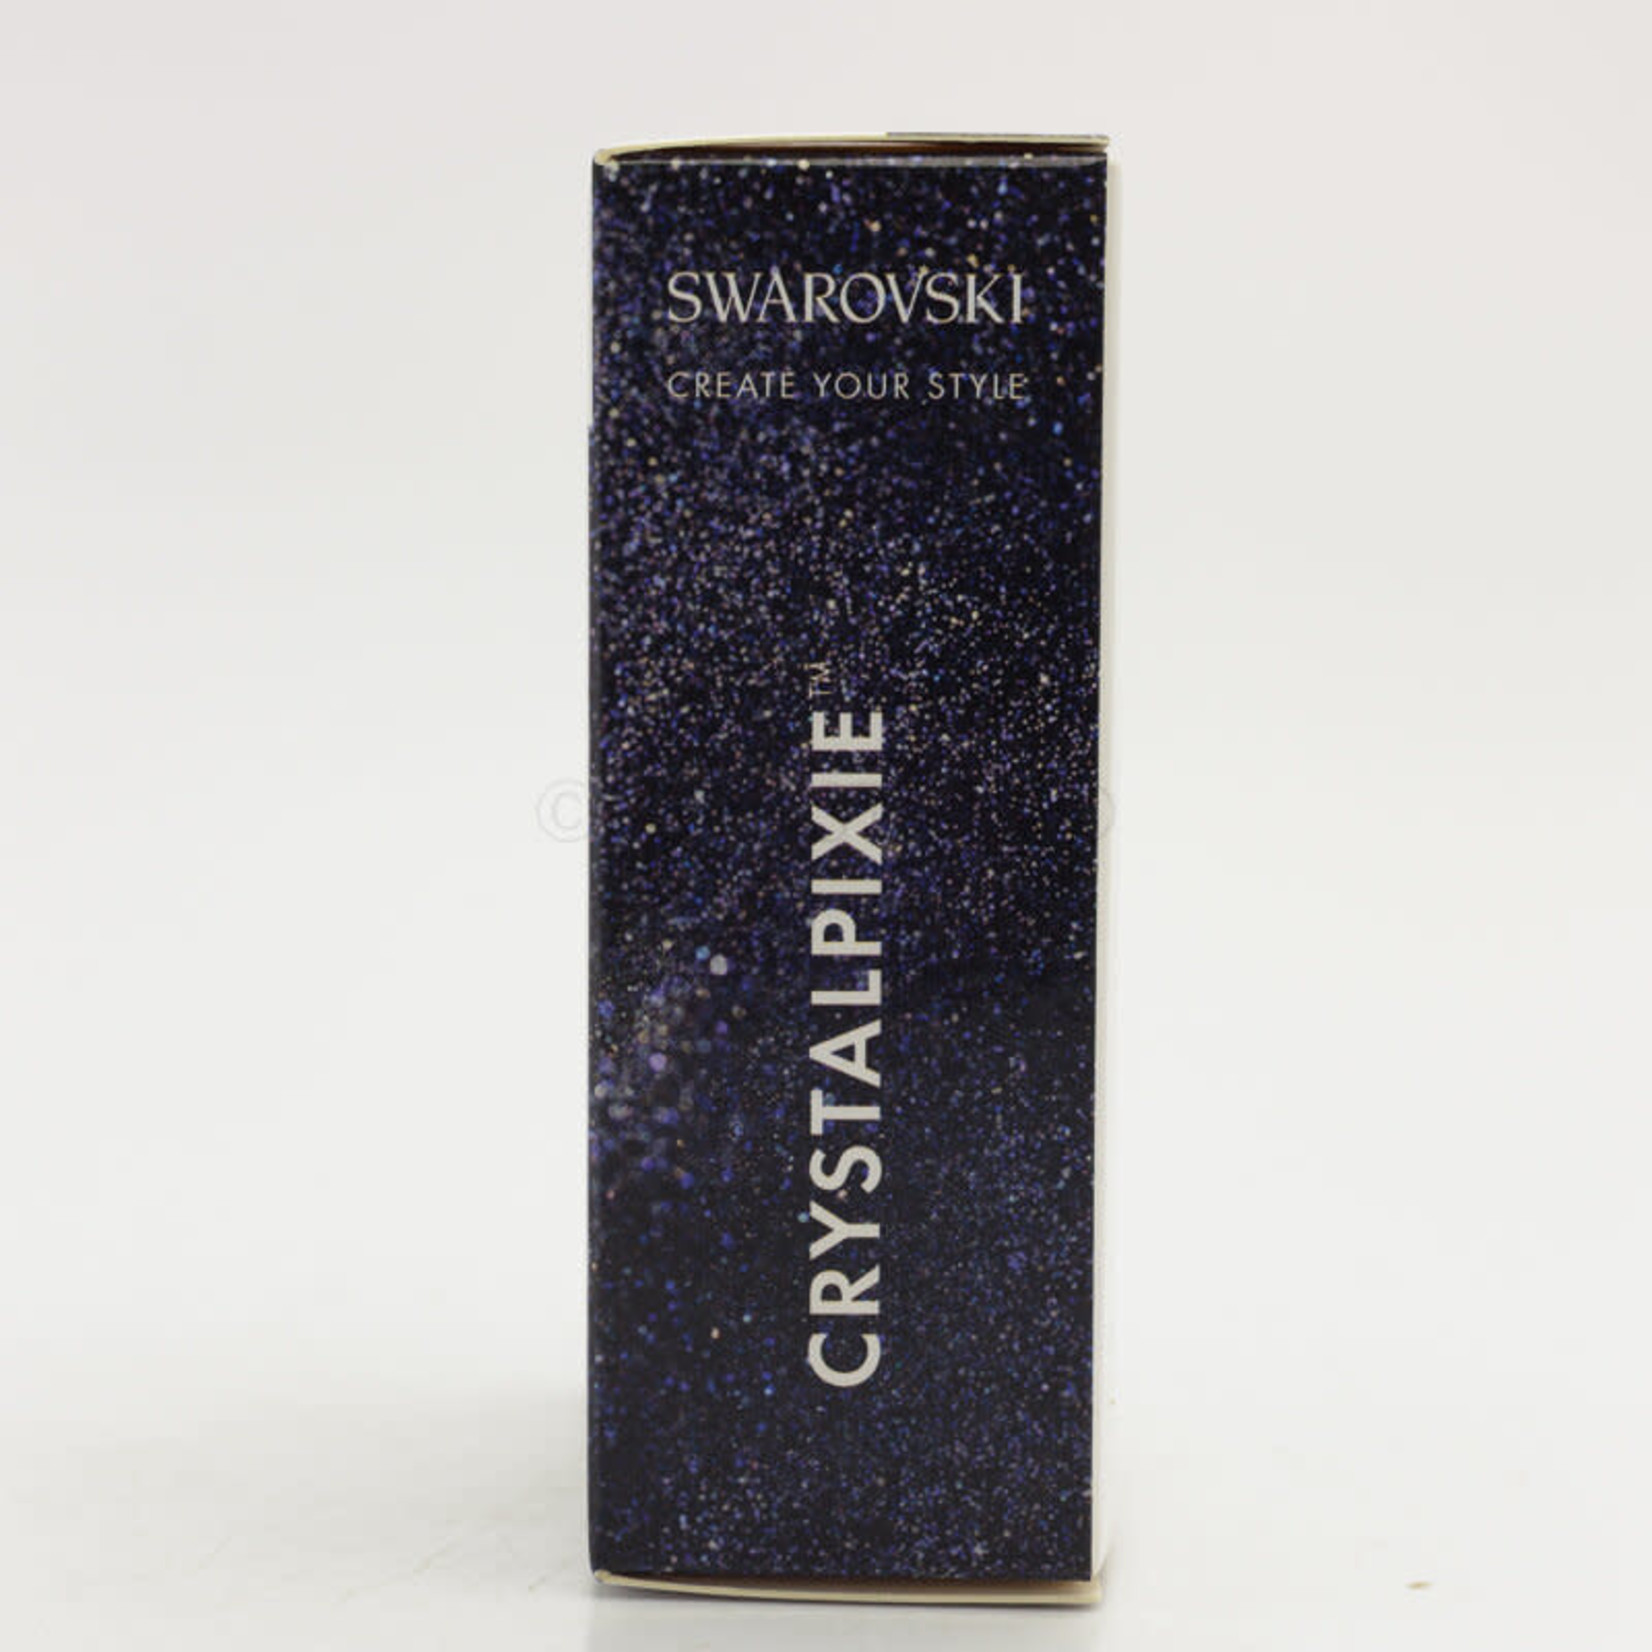 Swarovski Swarovski - Crystalpixie - Petite - Exotic East - 5g